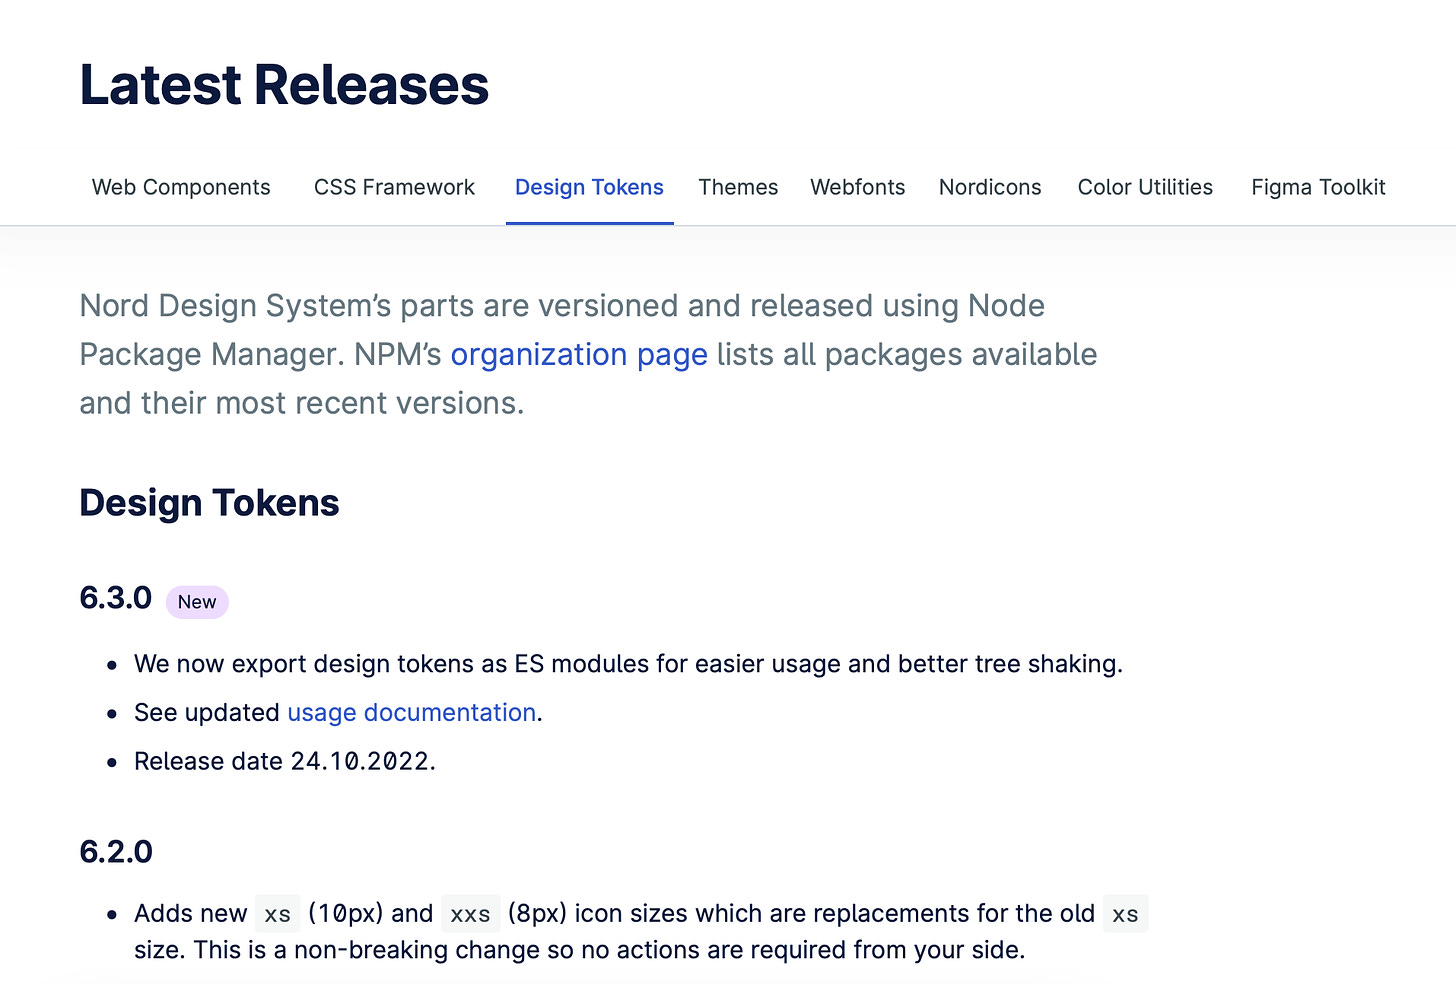 The design tokens changelog page on Nord Design System website